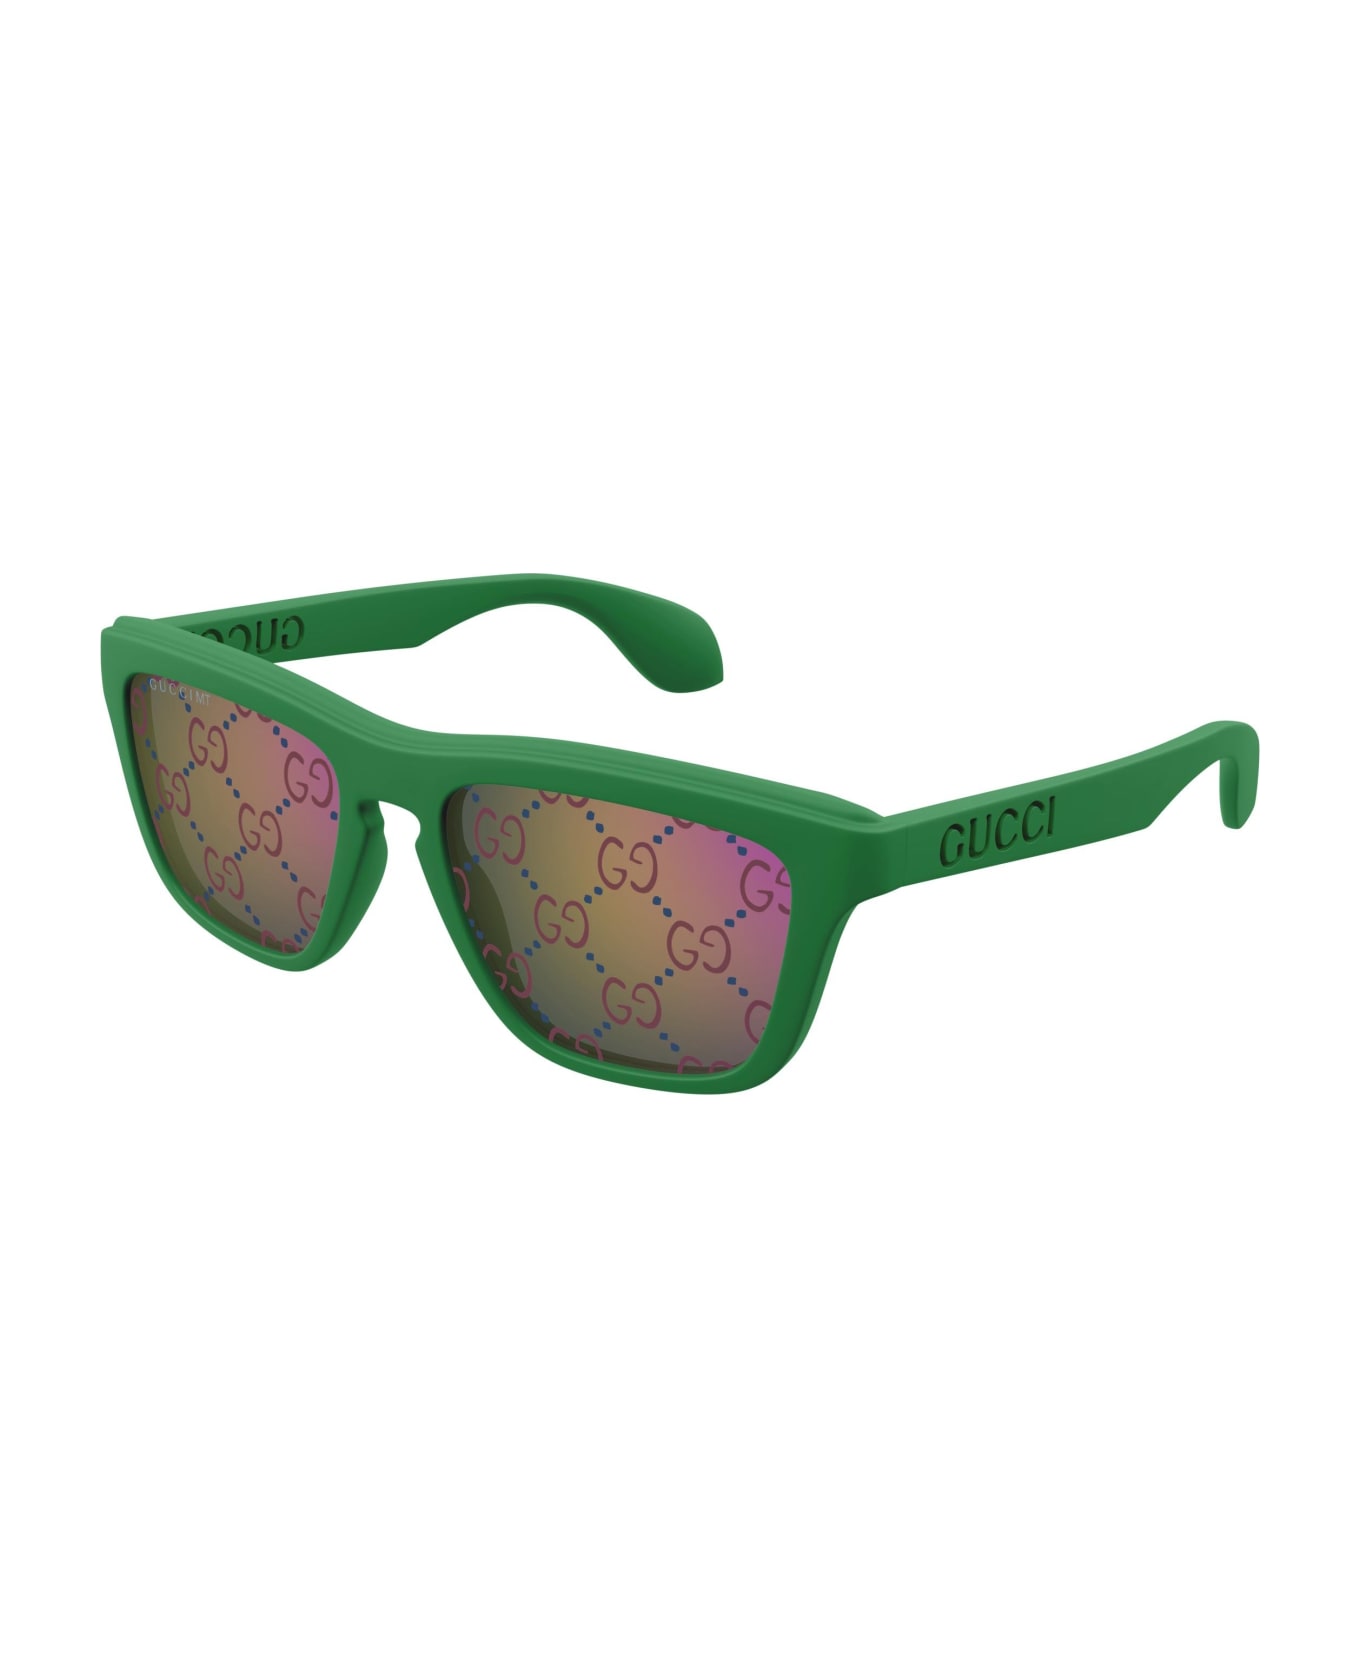 Gucci Eyewear Sunglasses - Verde/Blu サングラス